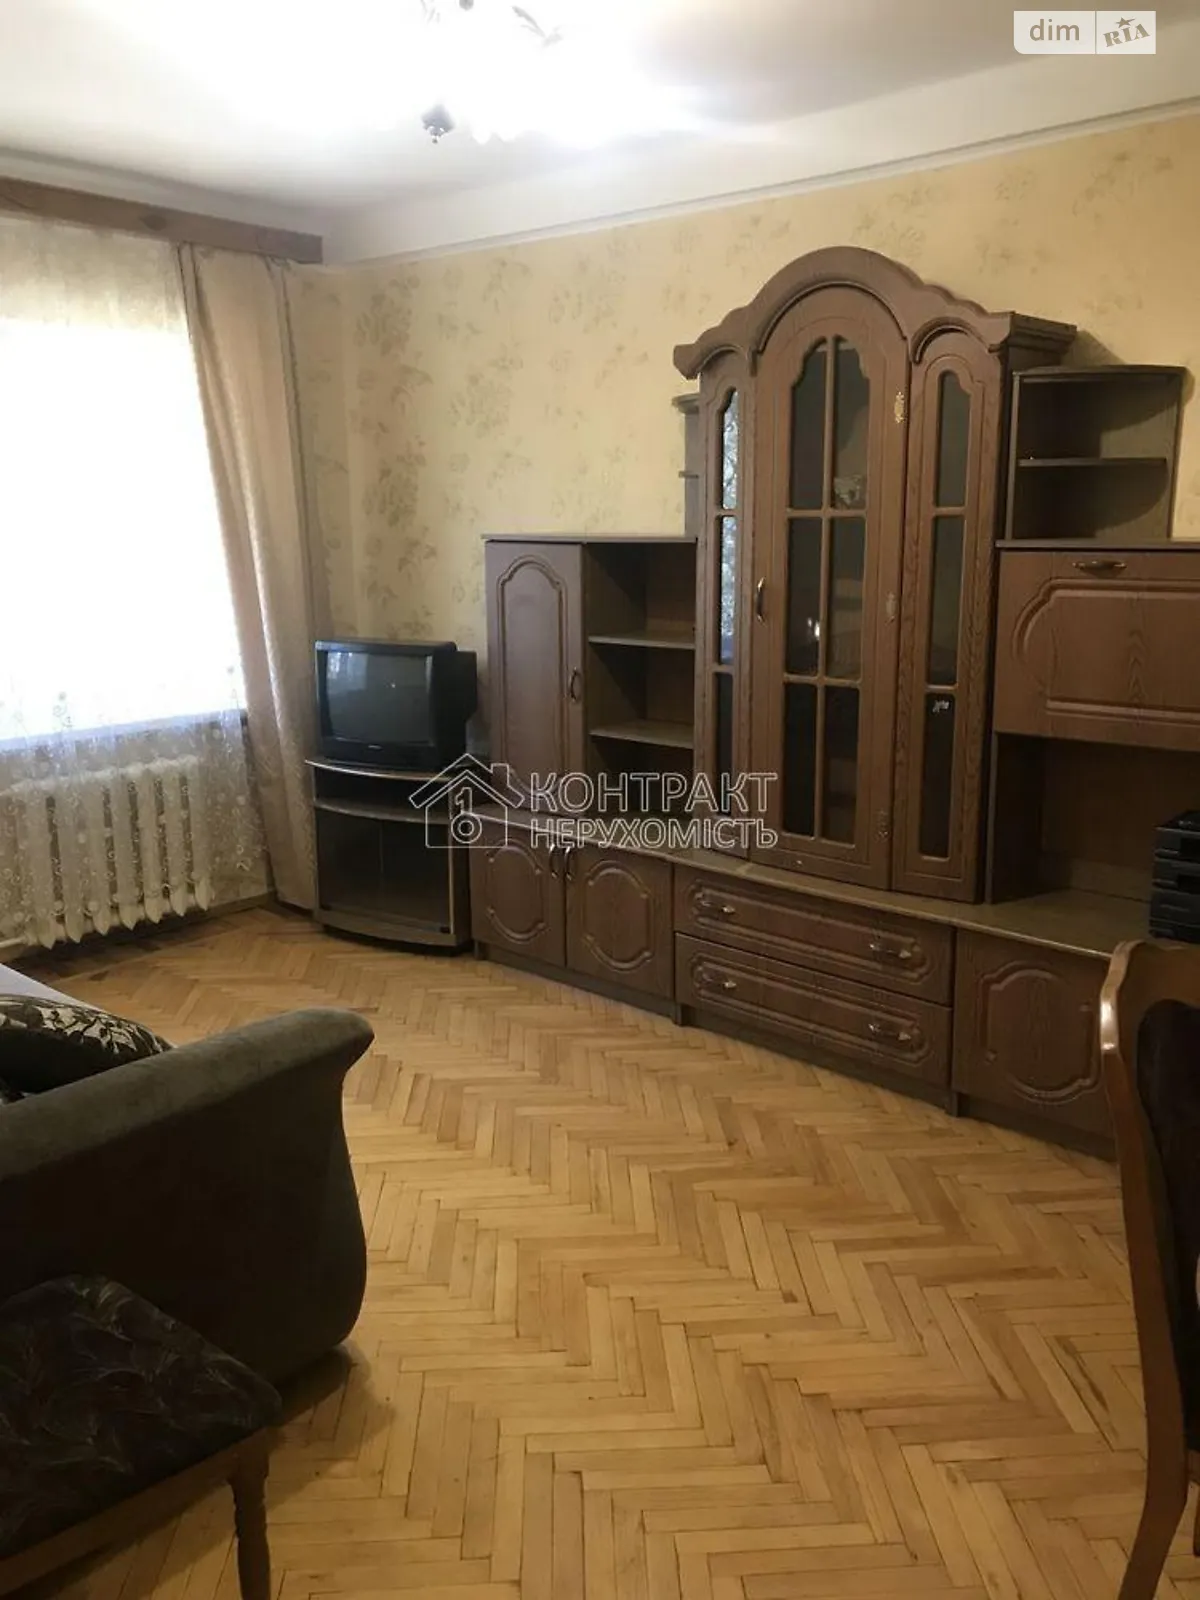 Сдается в аренду 2-комнатная квартира 42 кв. м в Харькове, ул. Отакара Яроша